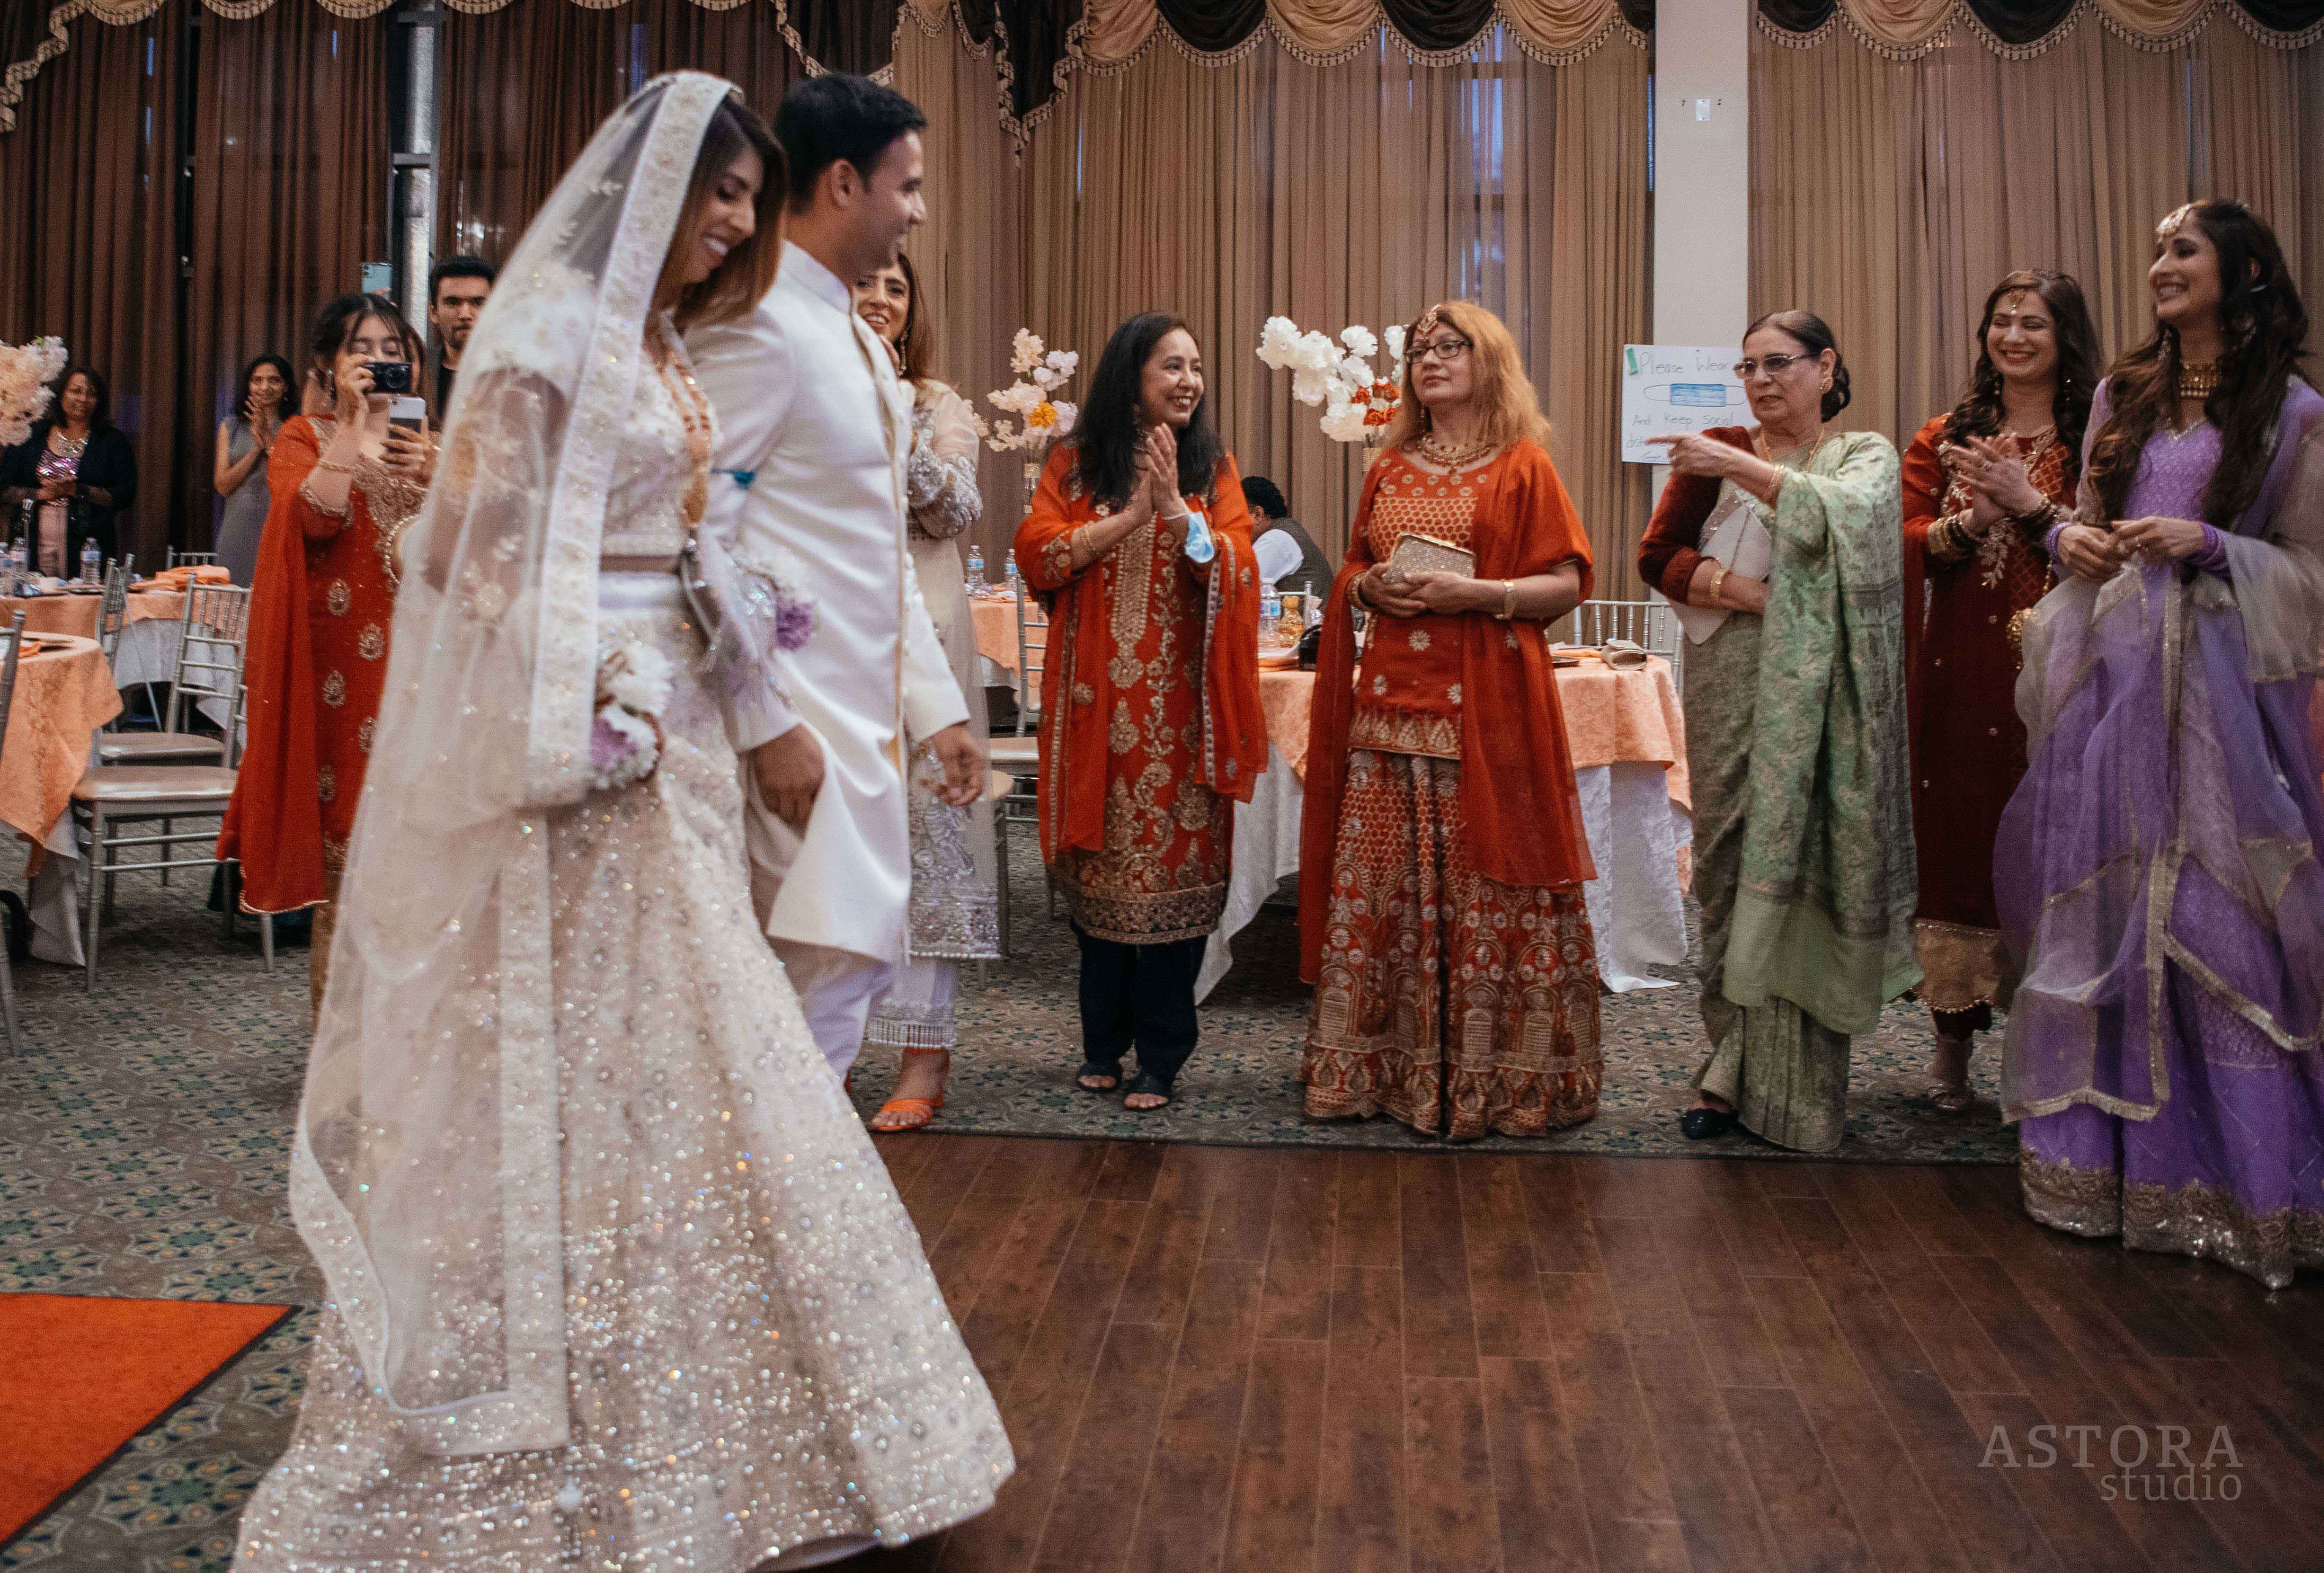 South Asian marriage image Toronto